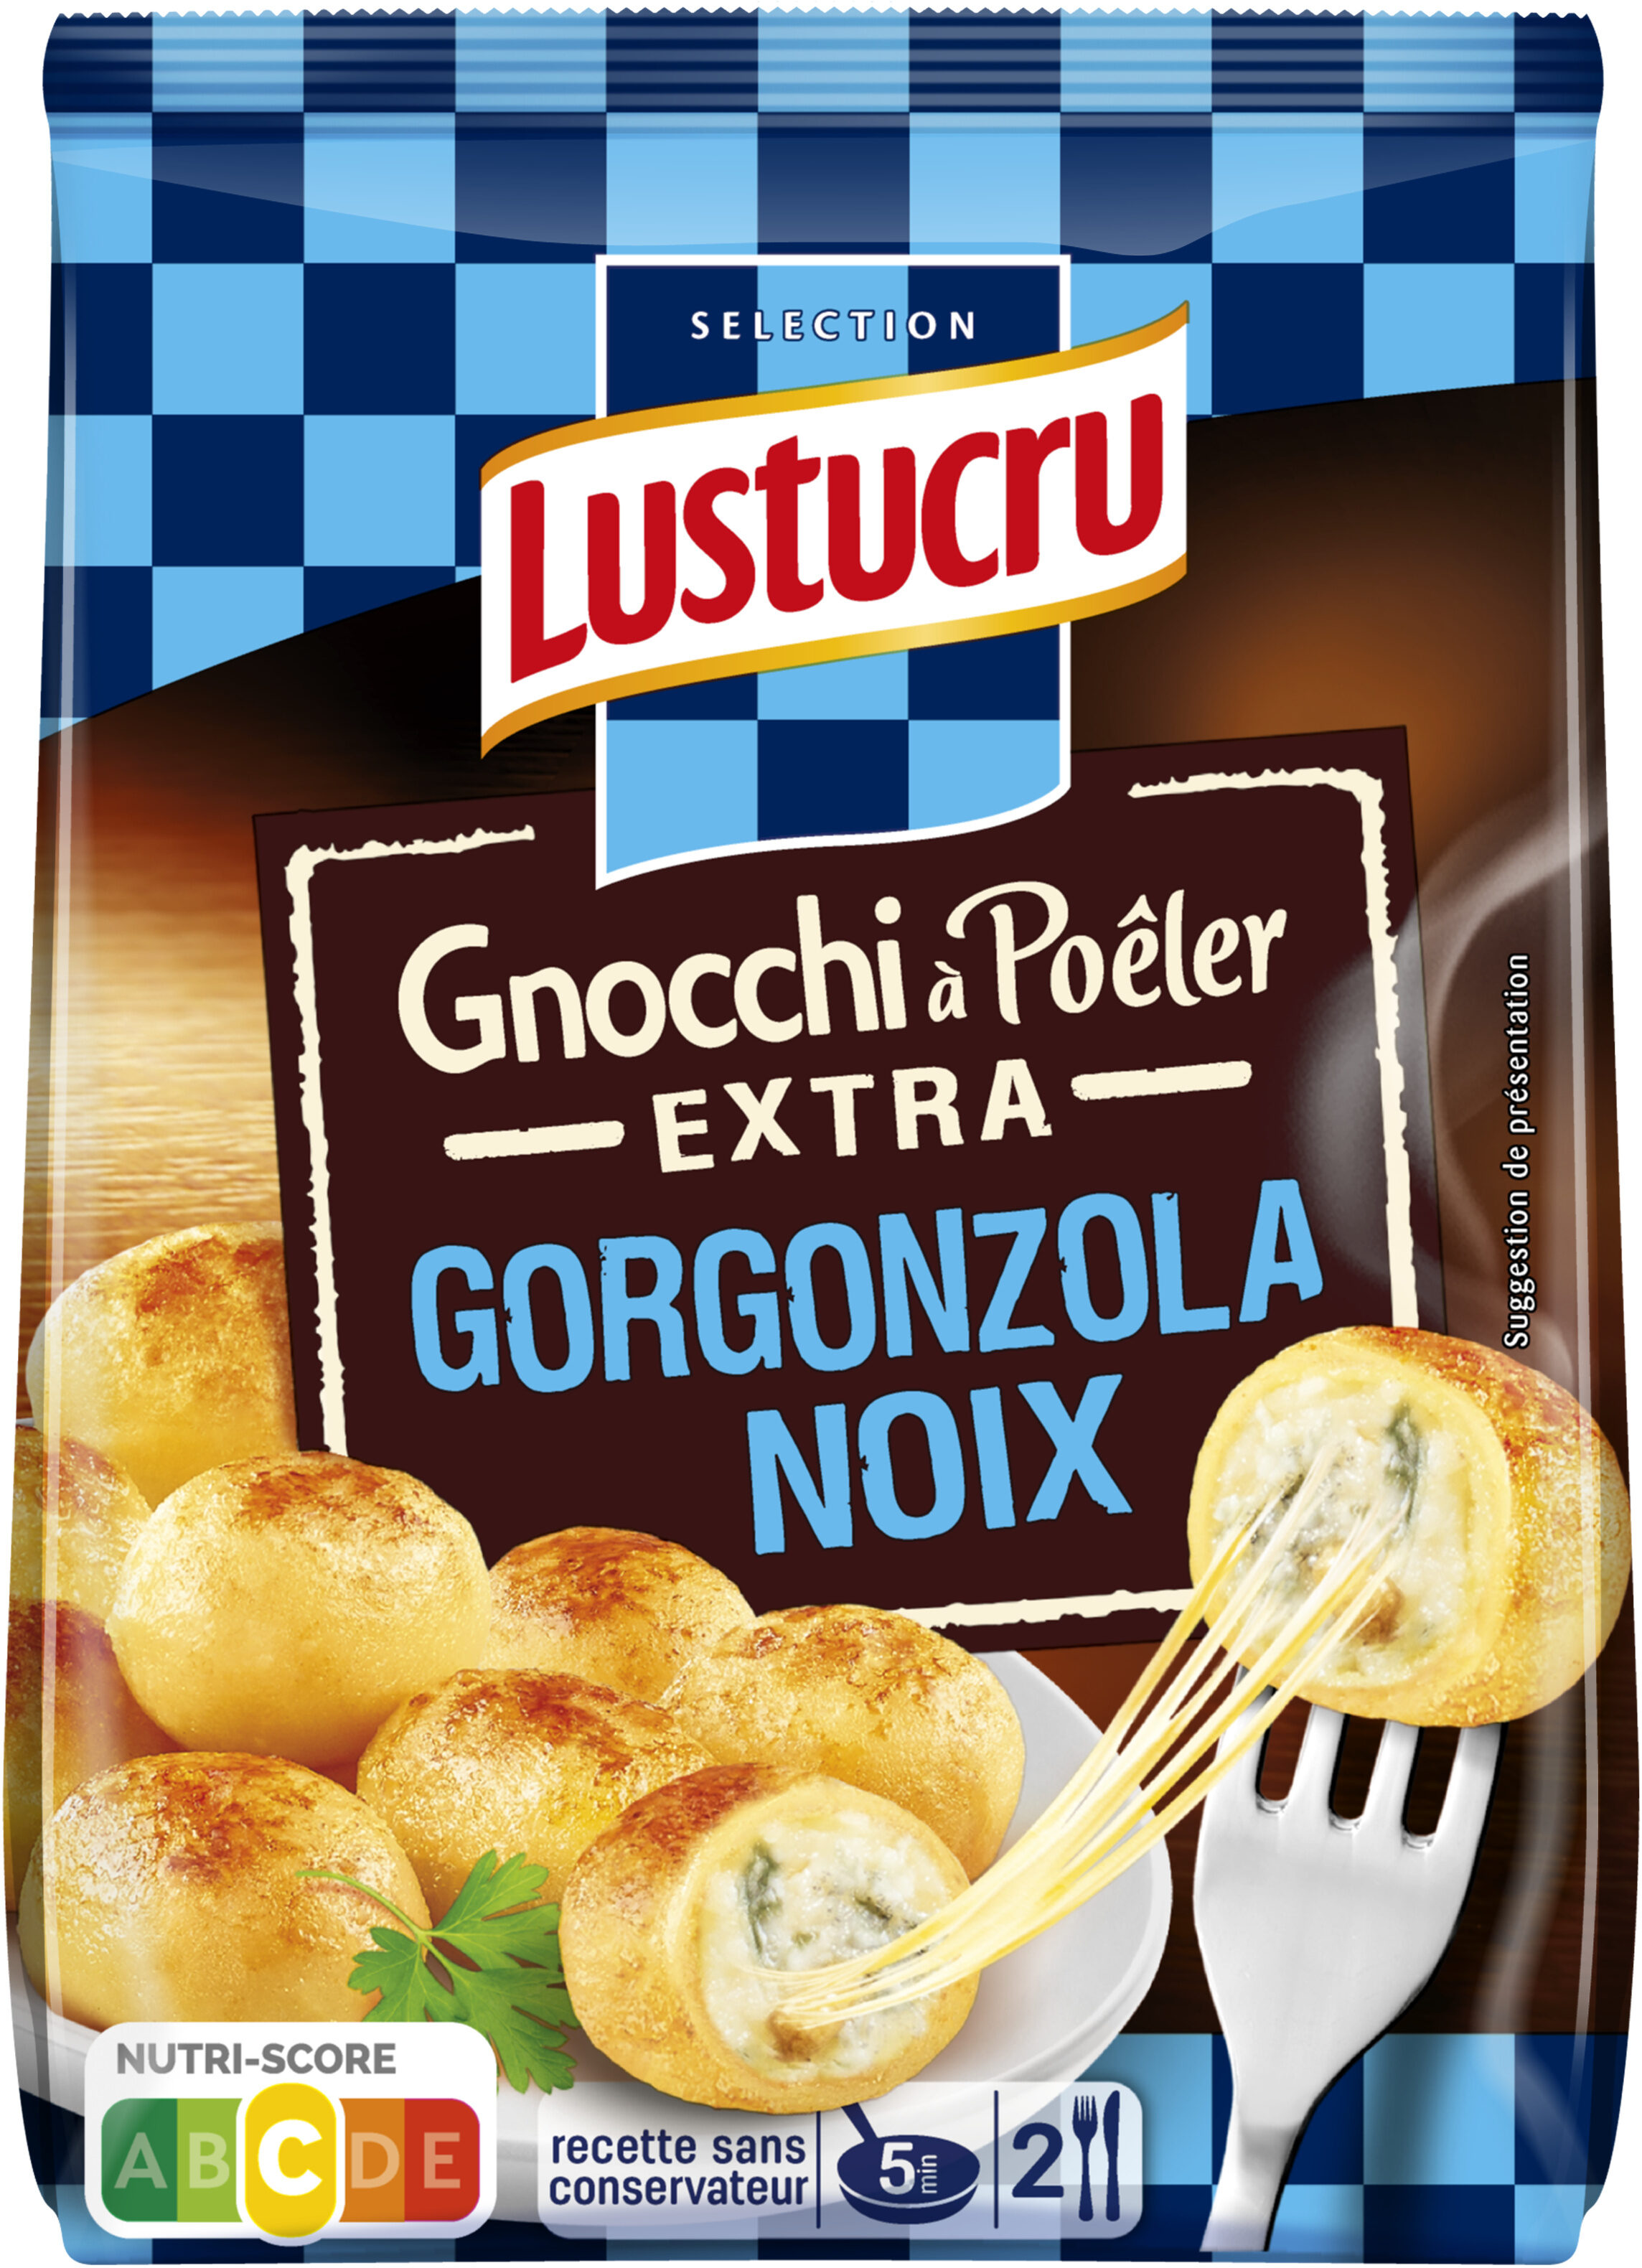 Lustucru gnocchi a poeler gorgonzola noix 280g - Product - fr